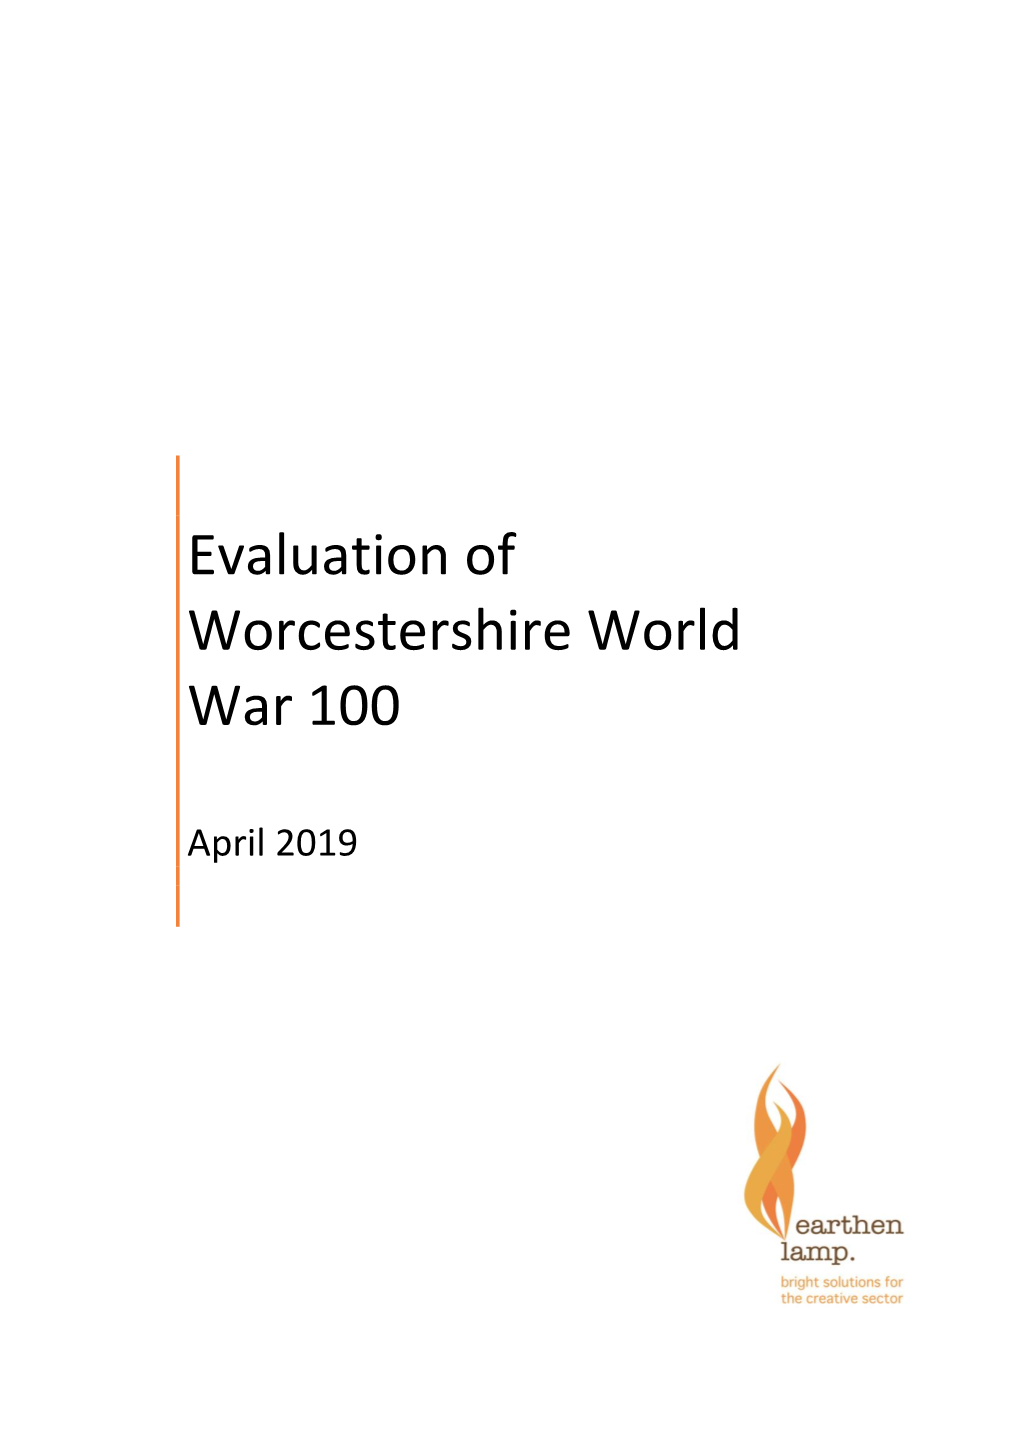 Evaluation of Worcestershire World War 100